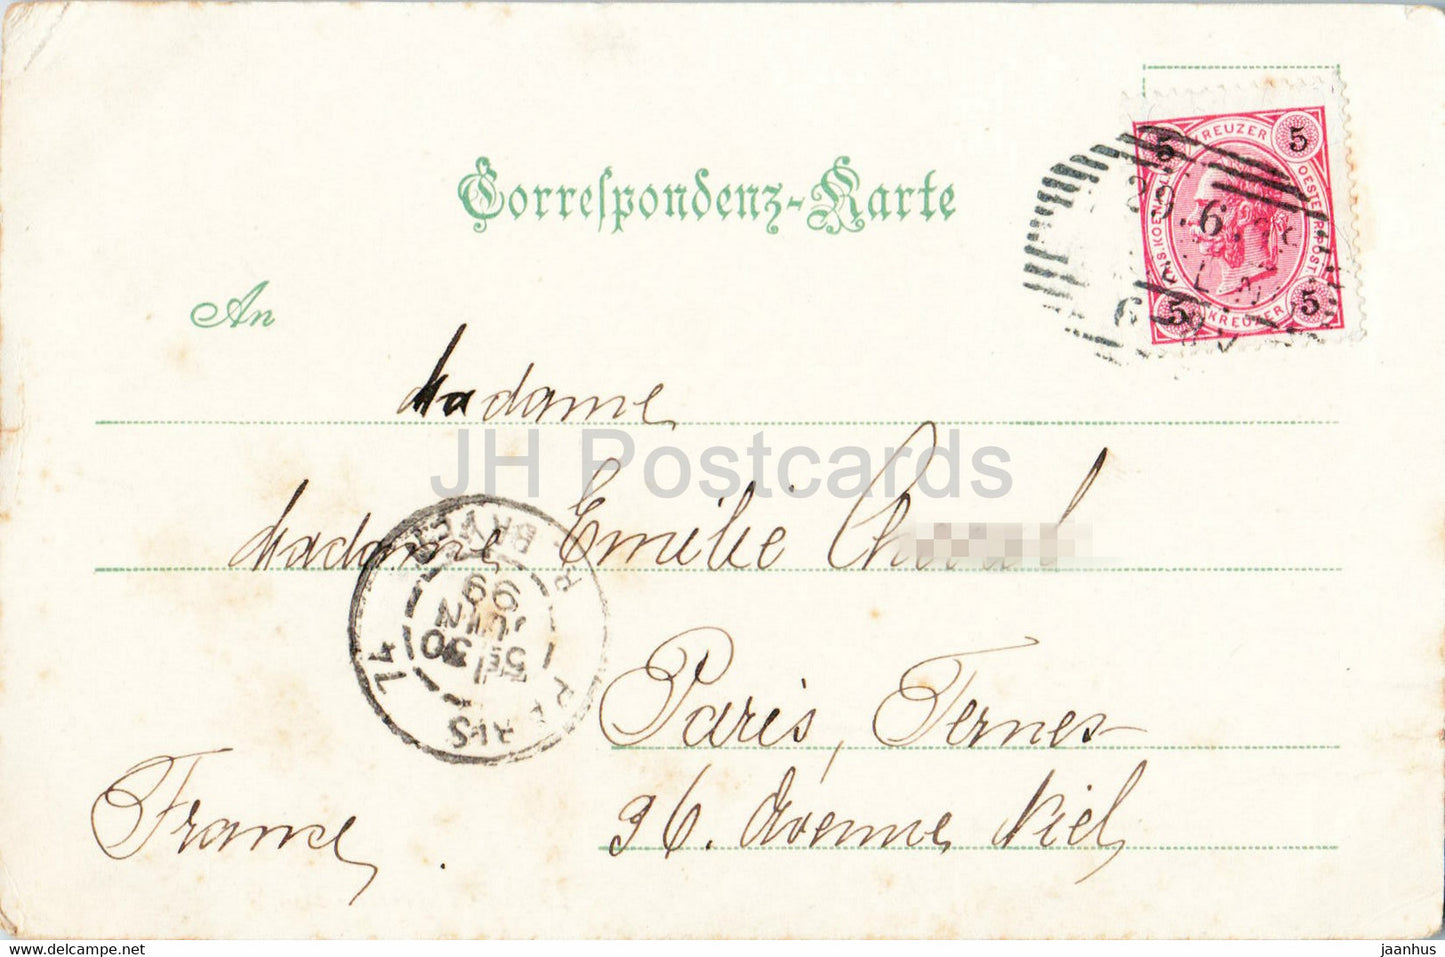 Gruss aus Wien - Maria Theresia Monument - old postcard - 1899 - Austria - used